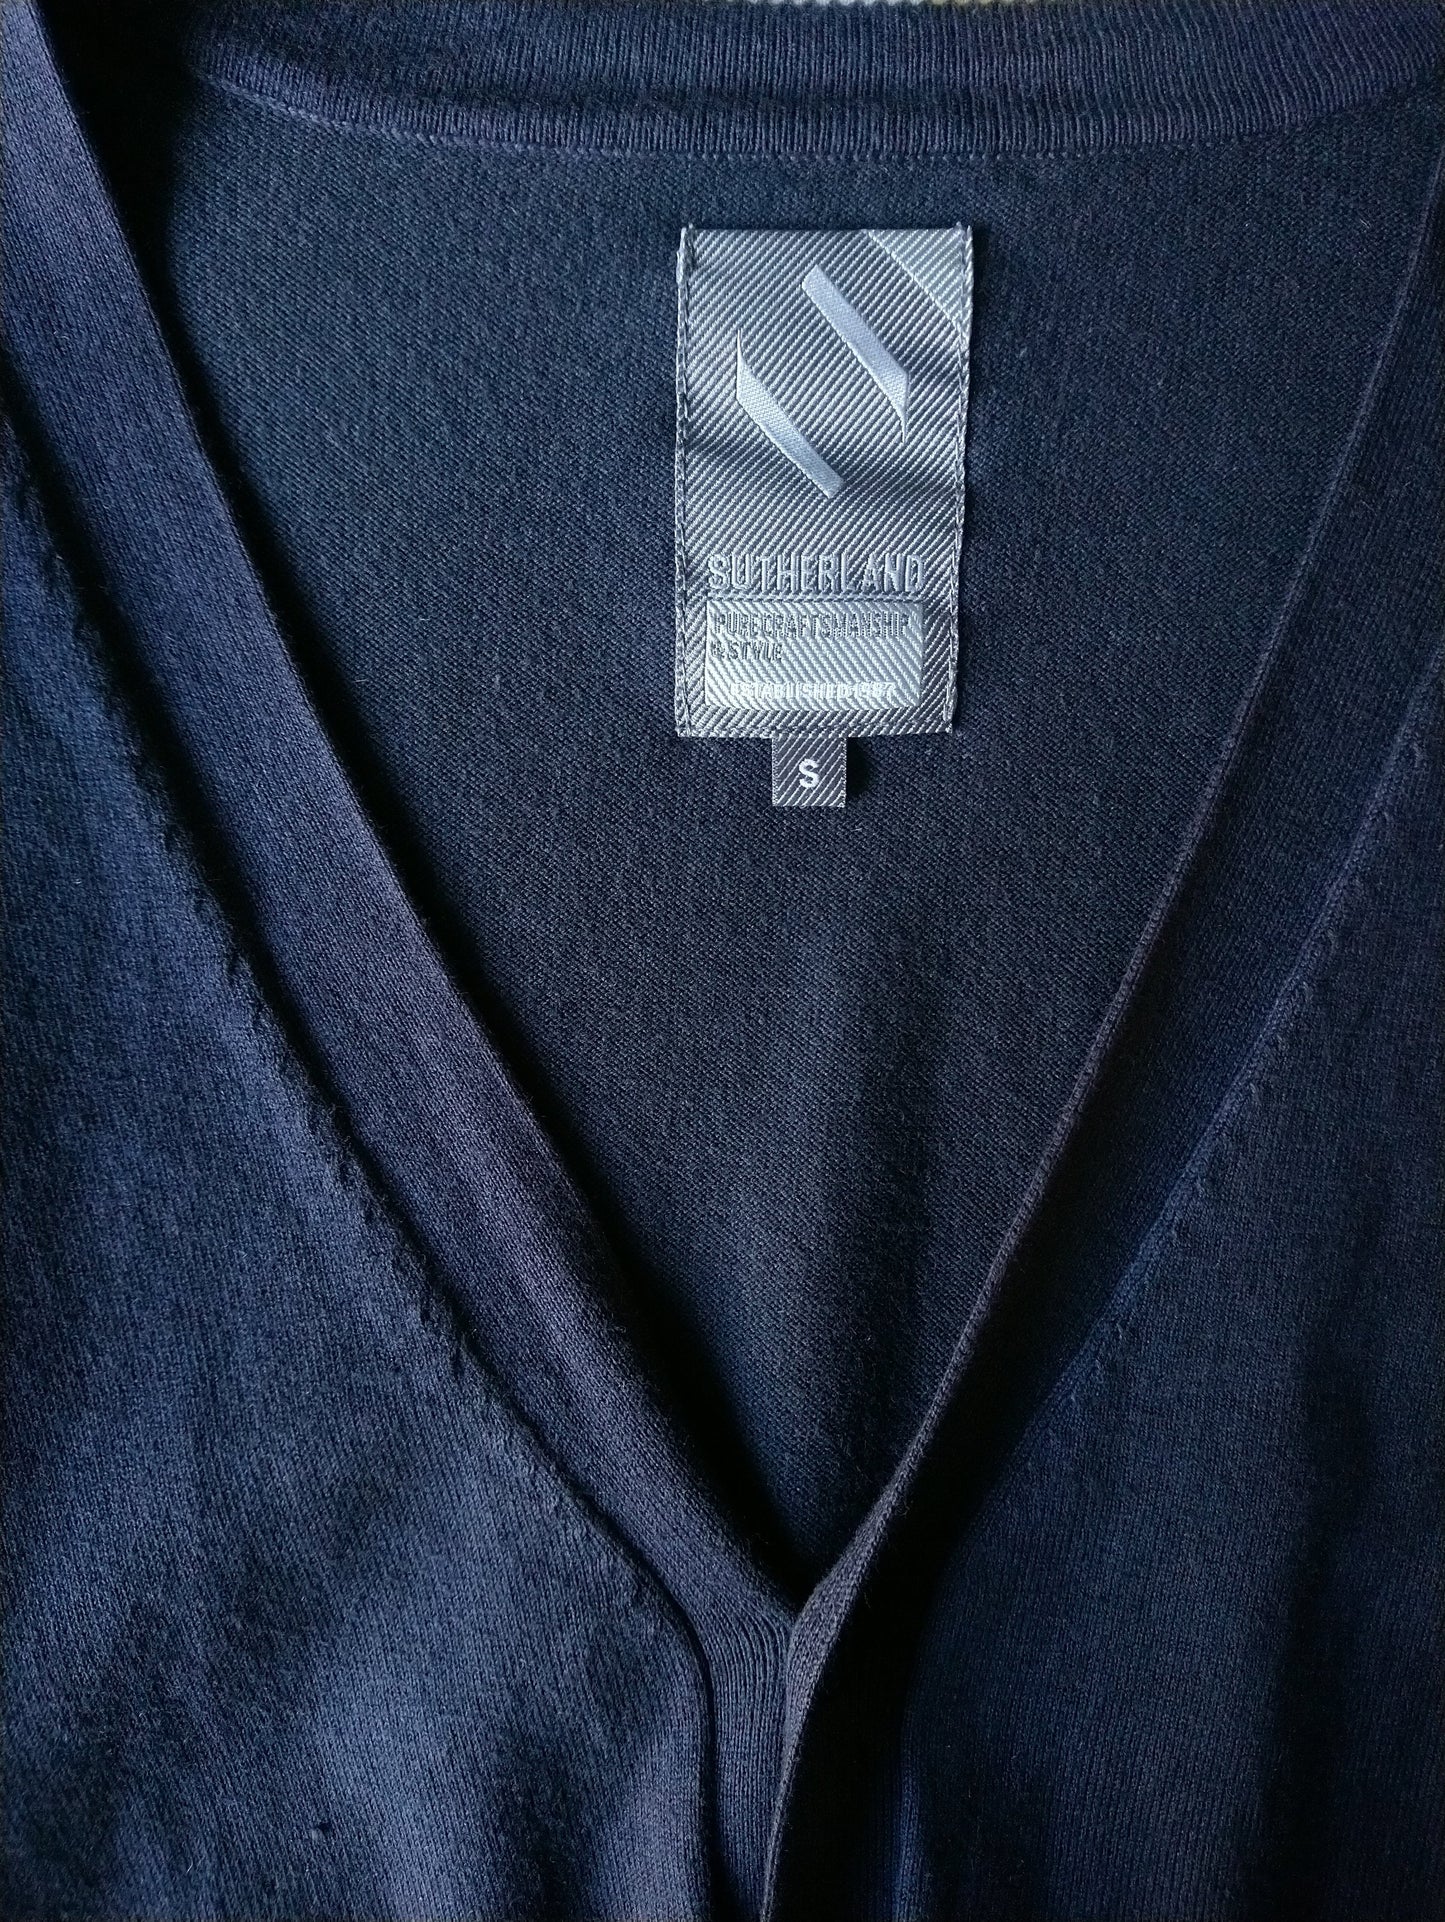 Sutherland Vest. Dark gray colored. Size S.